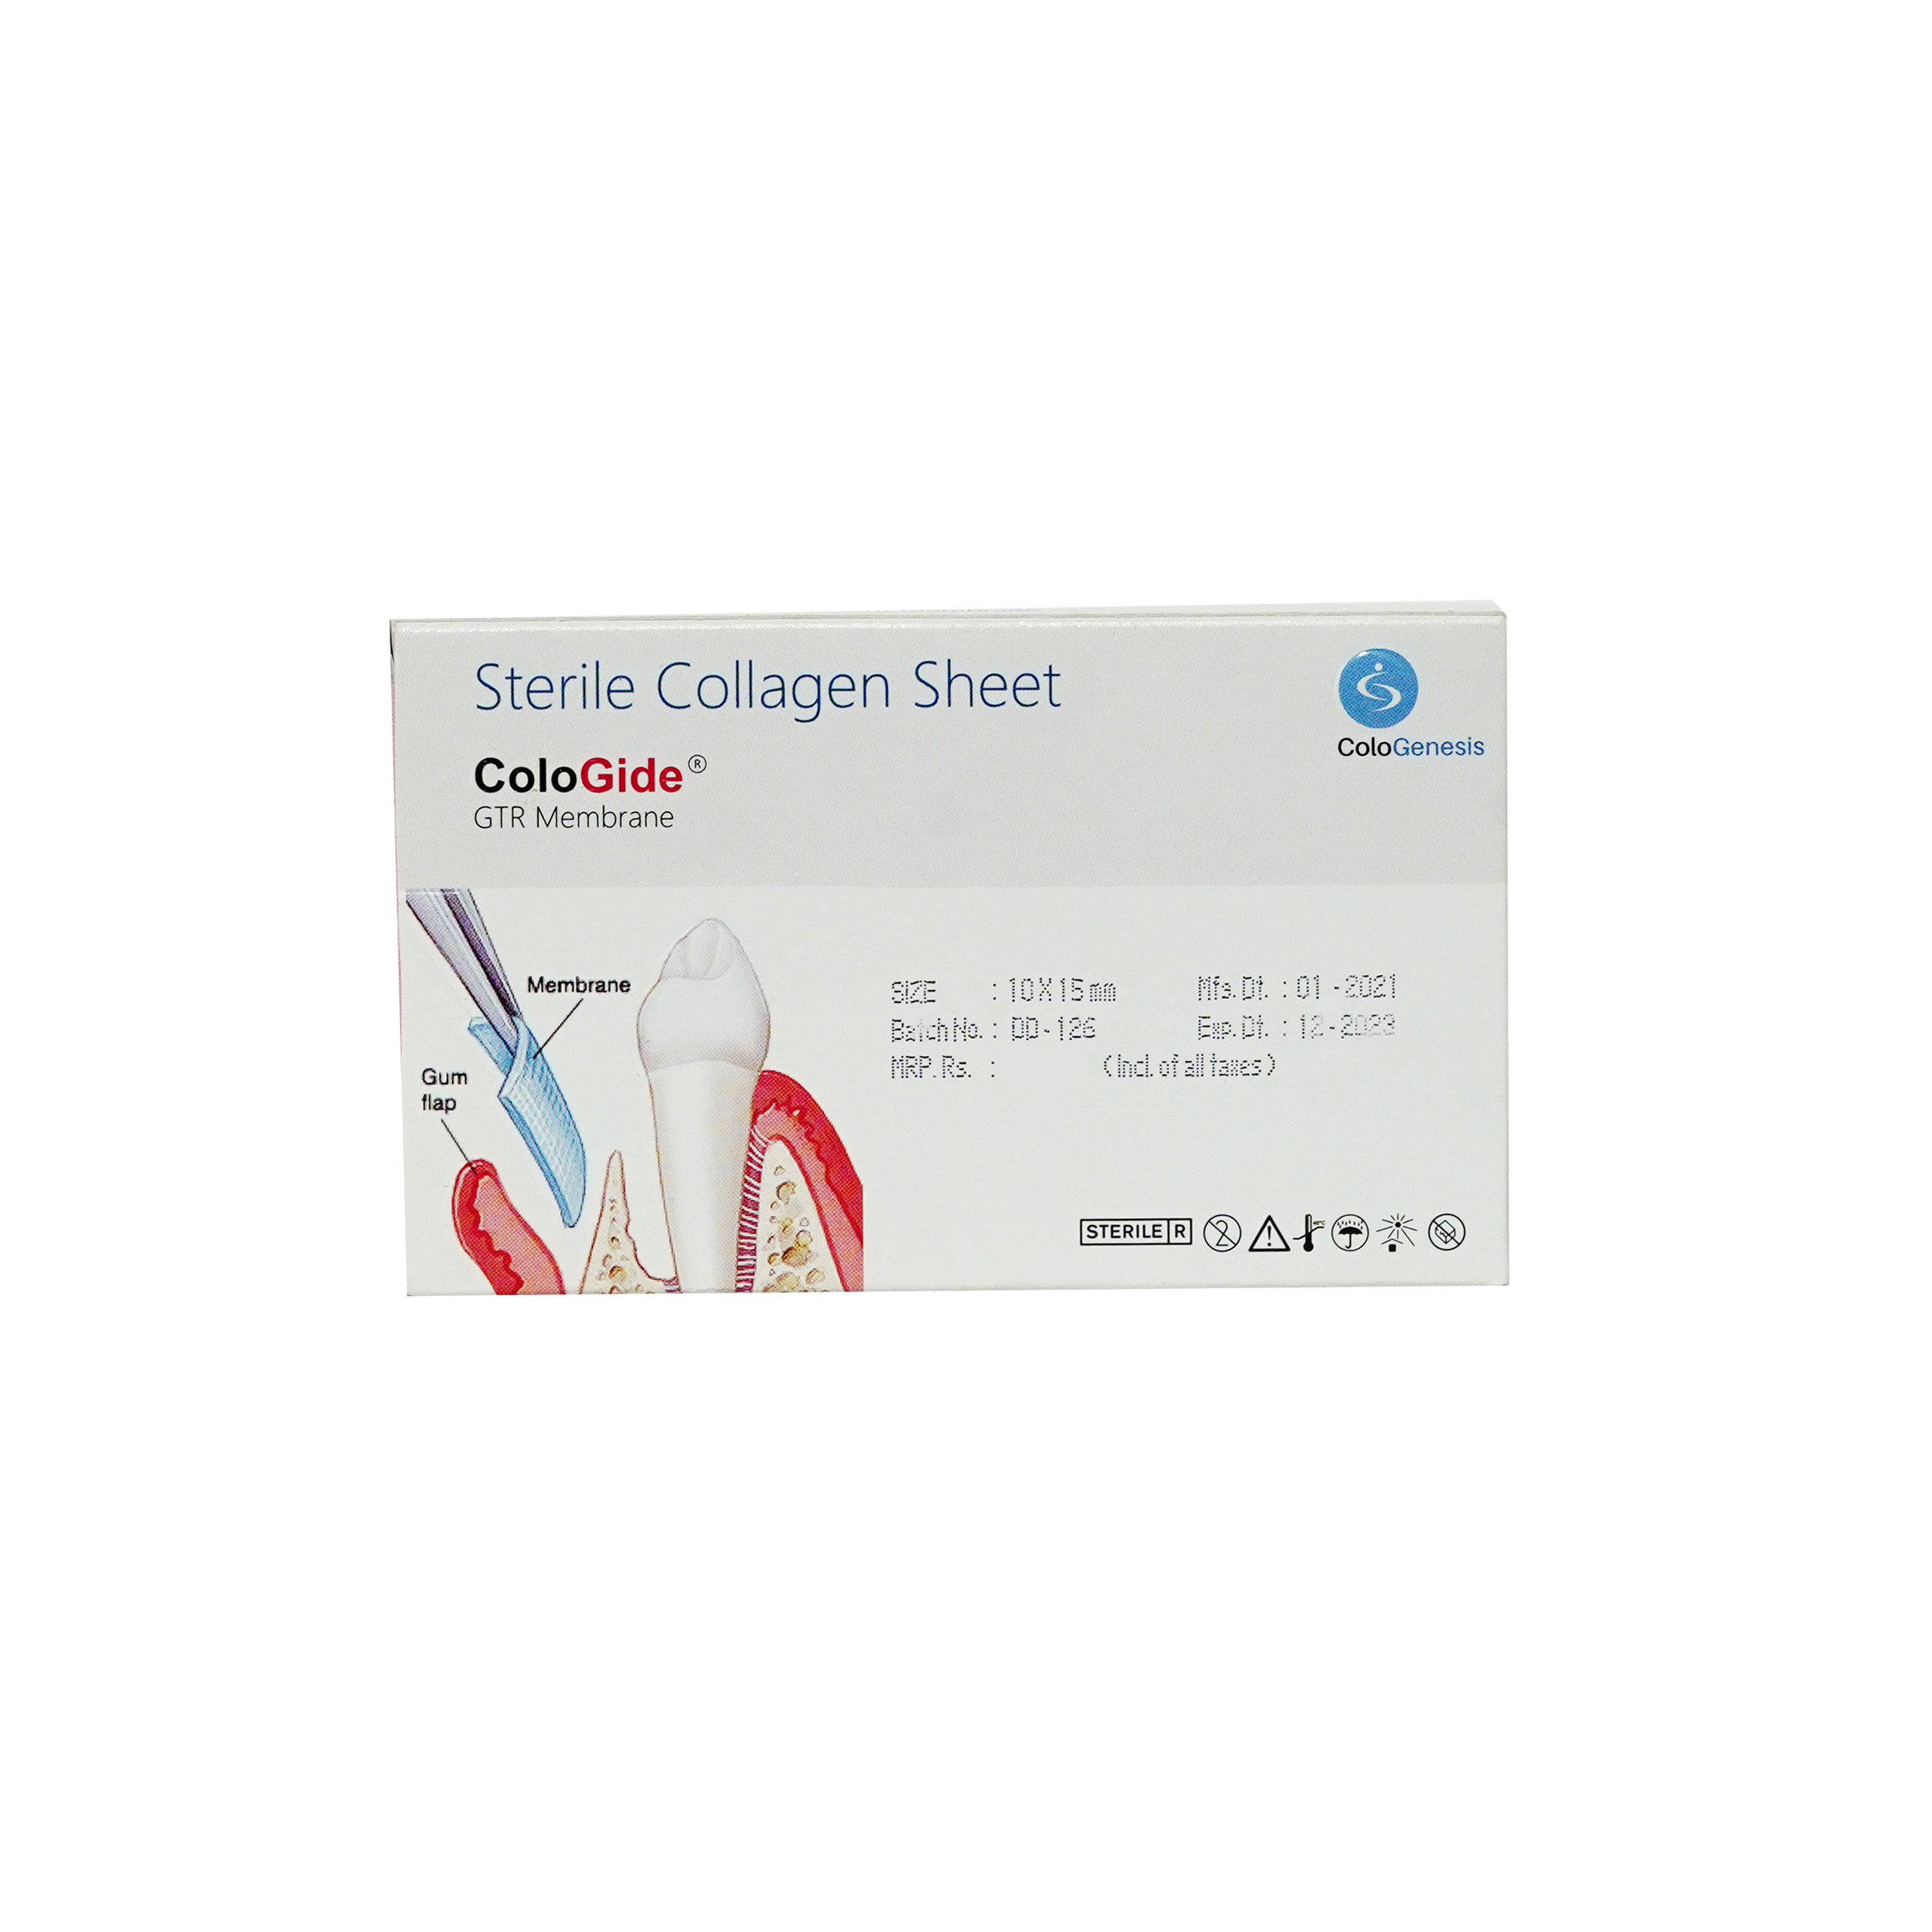 Cologenesis Colo Gide GTR Membrane Steril Collagen Sheet 15x20mm